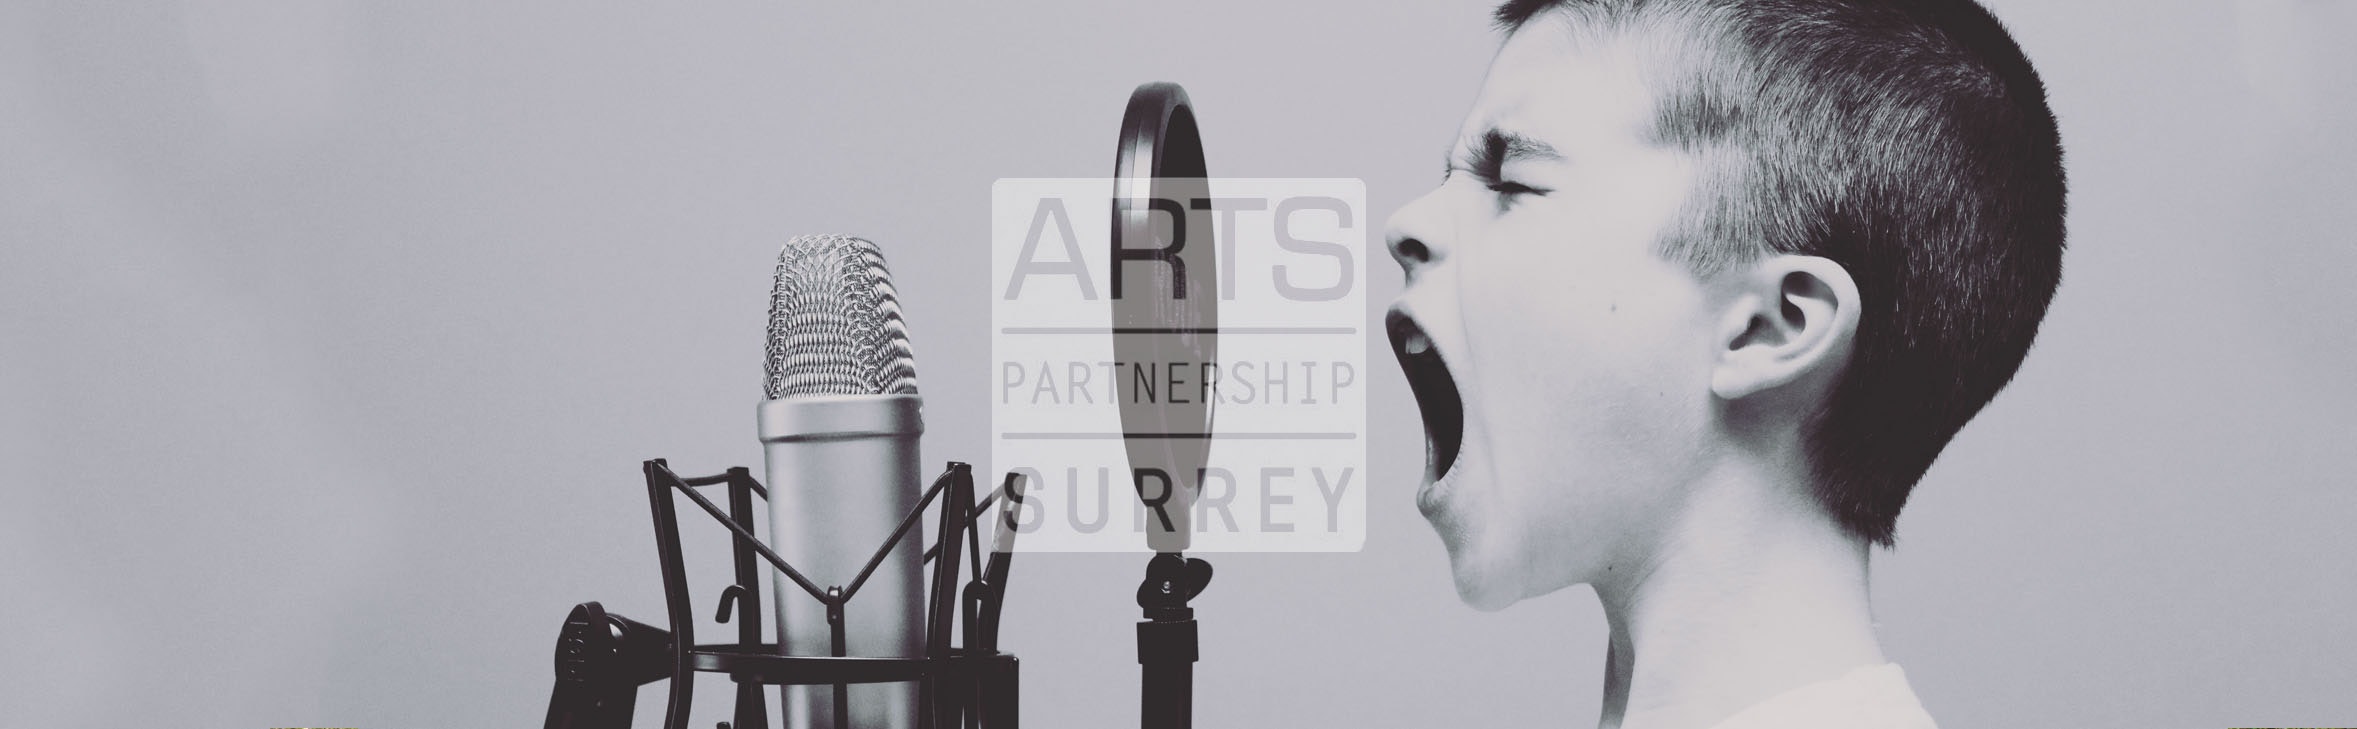 Arts Partnership Surrey